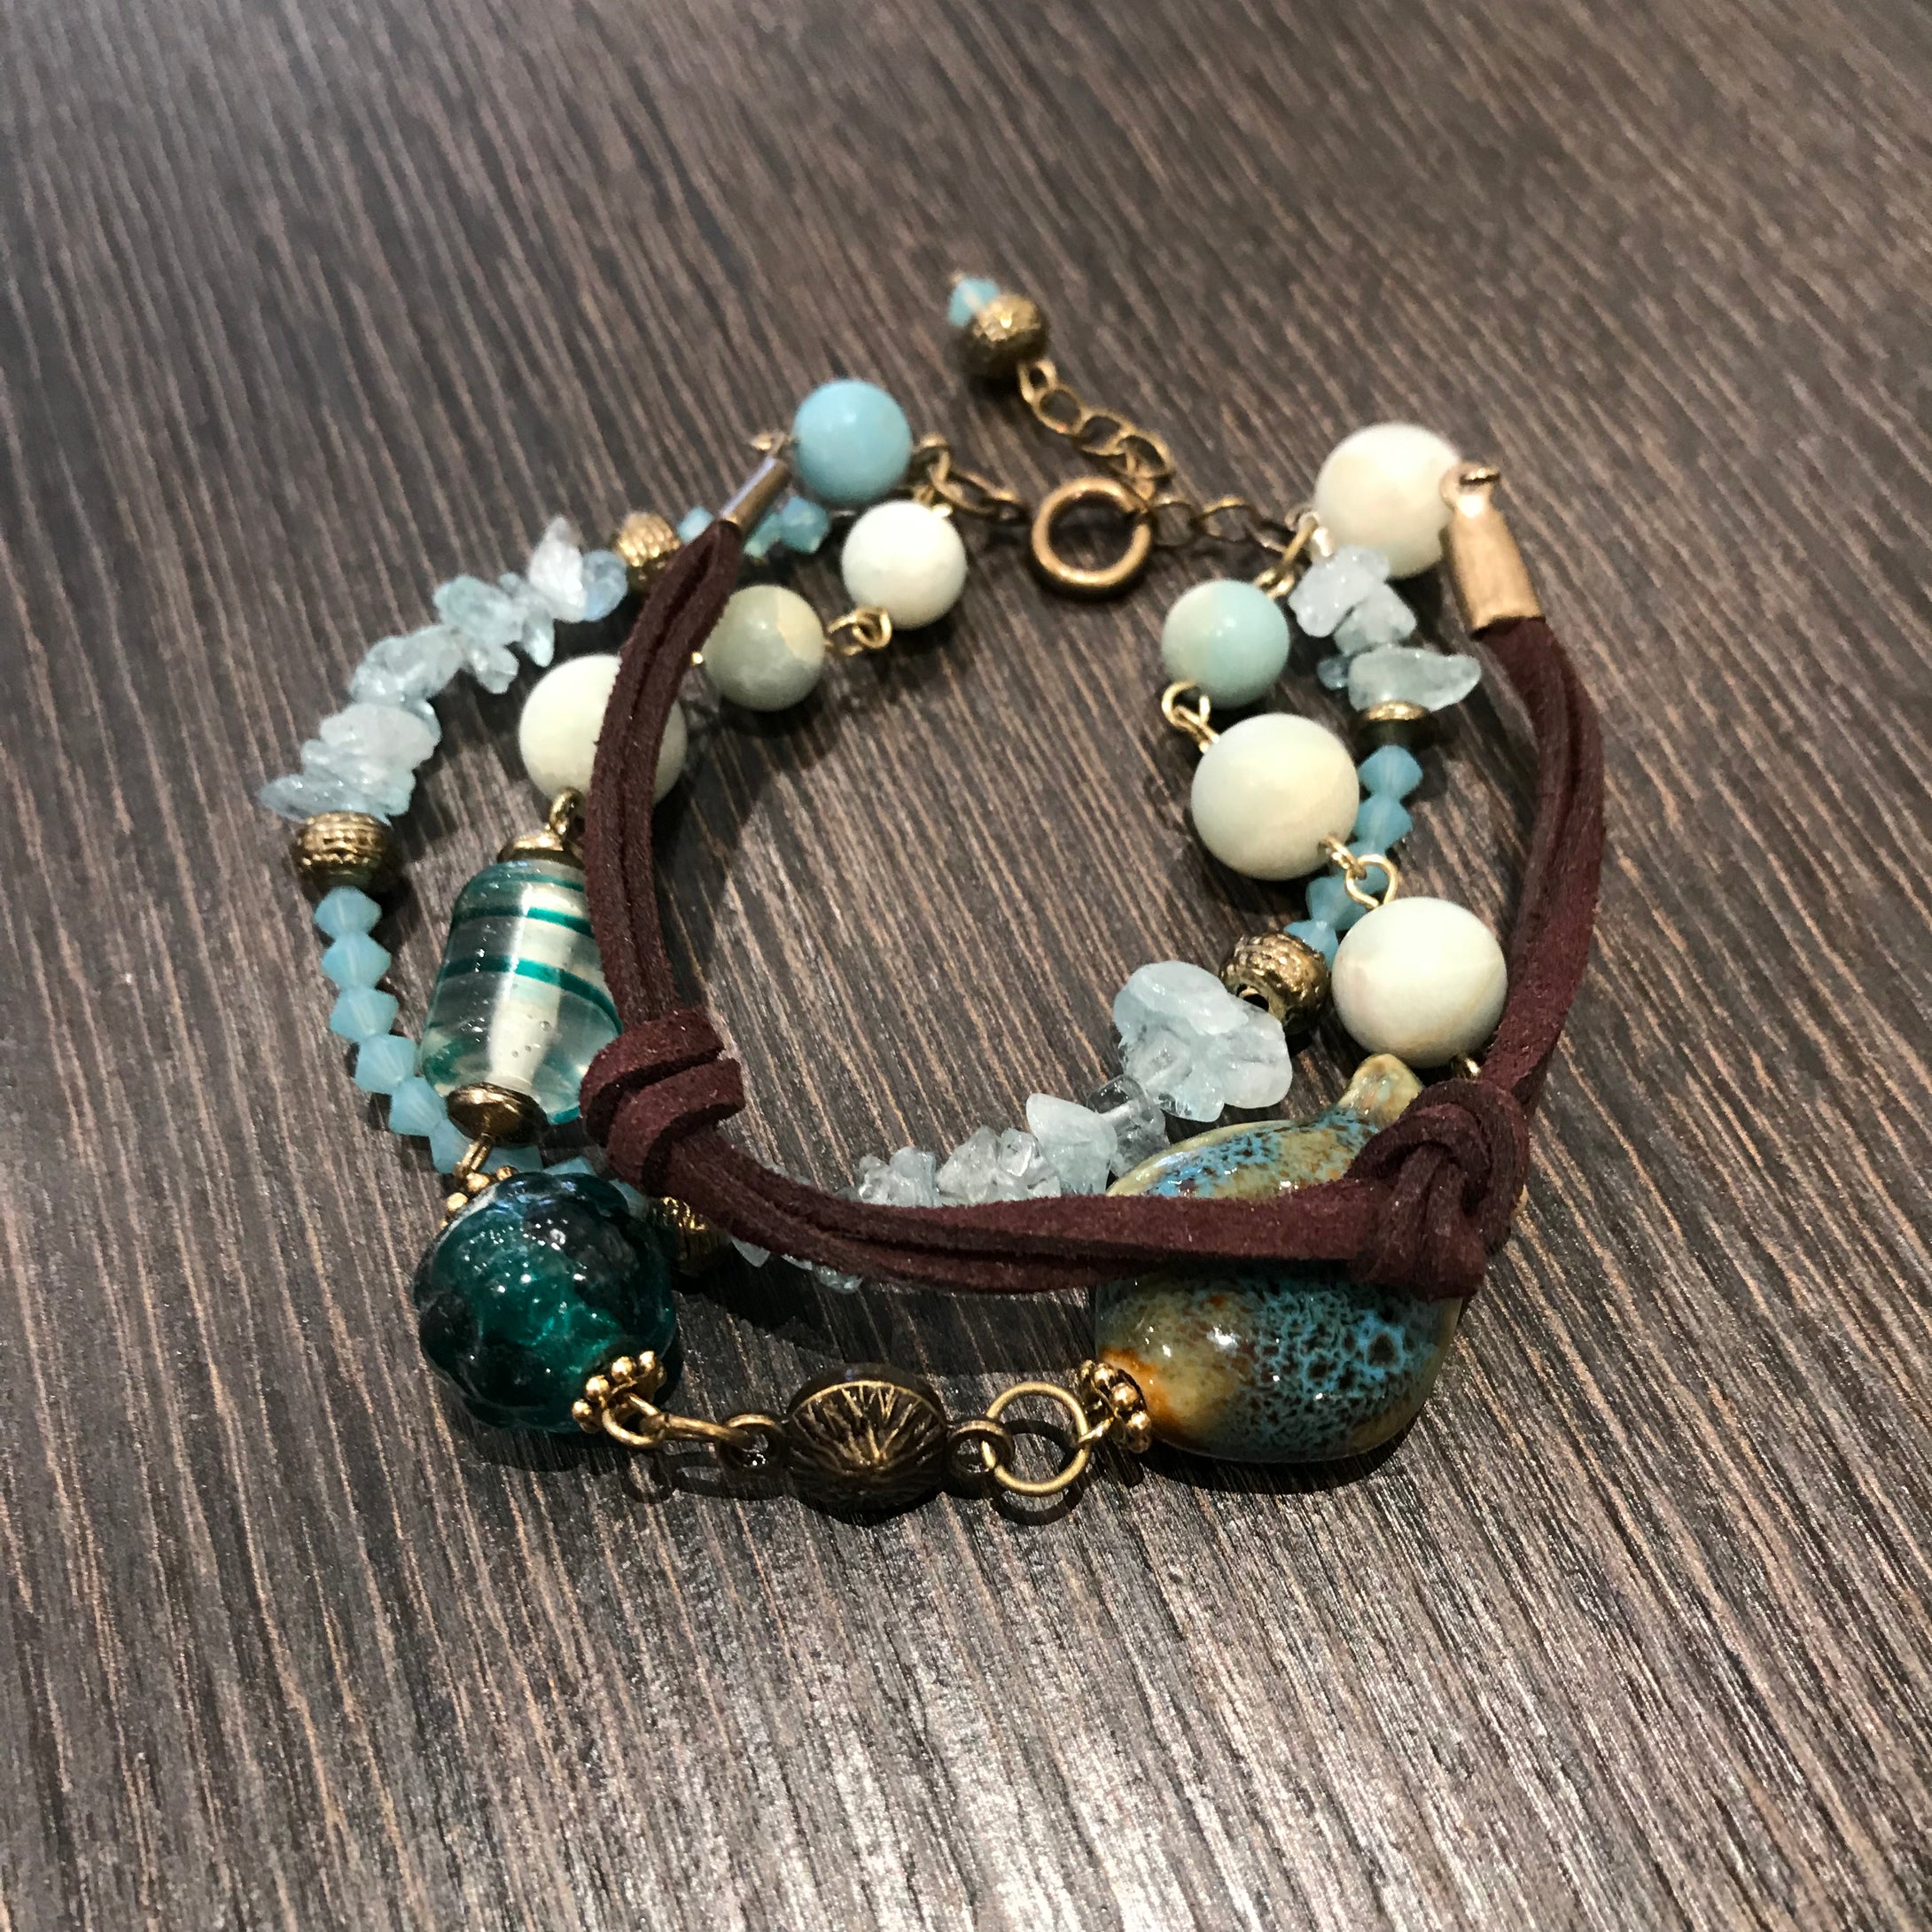 Hand made Bracelet with Turquoise/Leather/Ceramics/Swarovski crystals